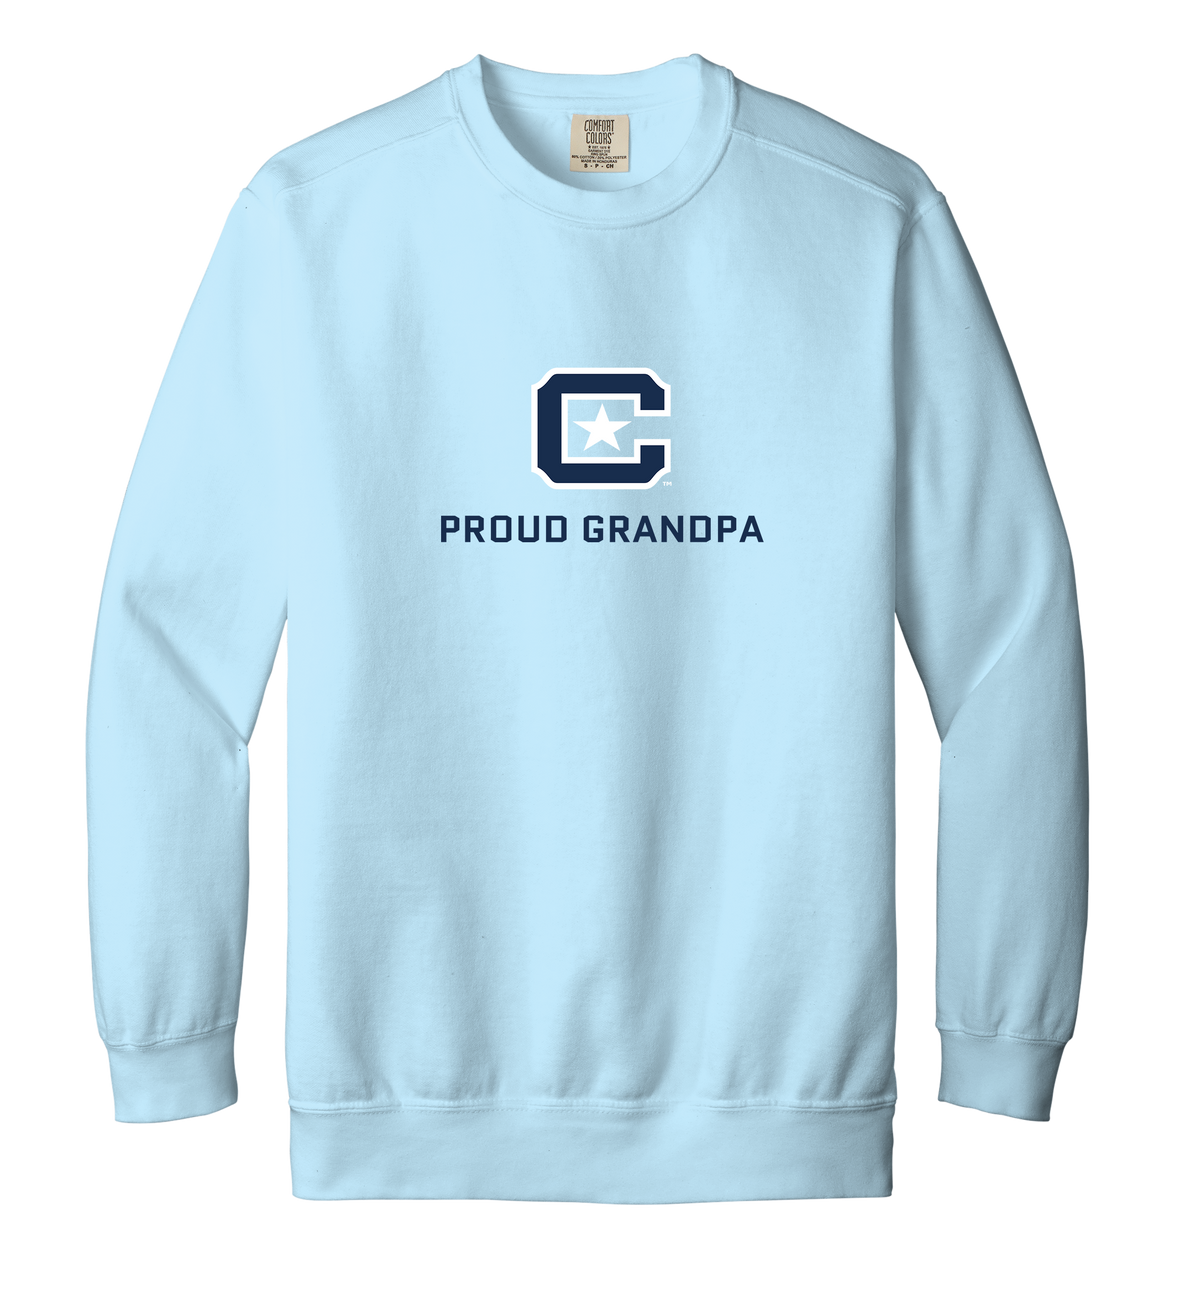 The Citadel Block C, Proud Grandpa, Embroidered Comfort Colors ® Ring Spun Crewneck Sweatshirt